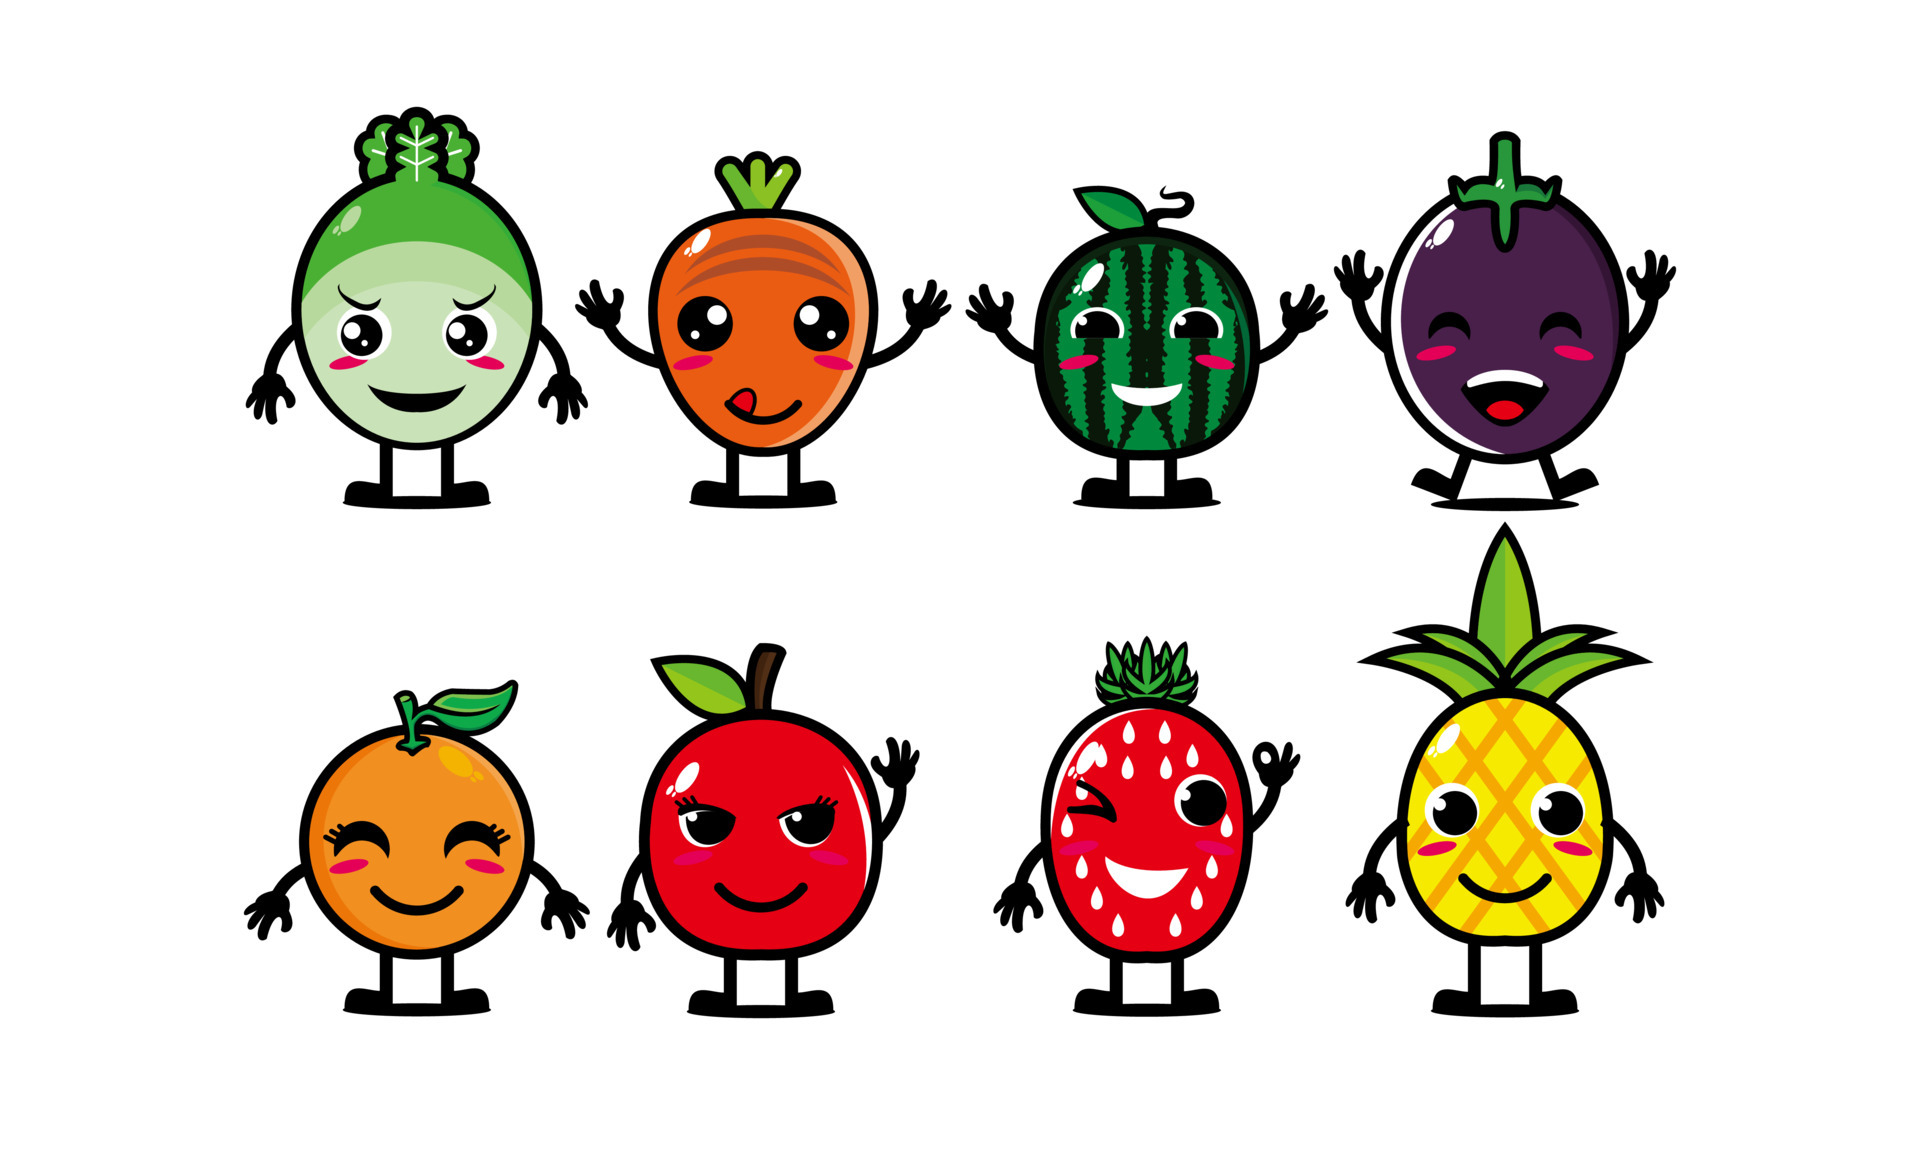 Conjunto de frutas kawaii dos desenhos animados isolado